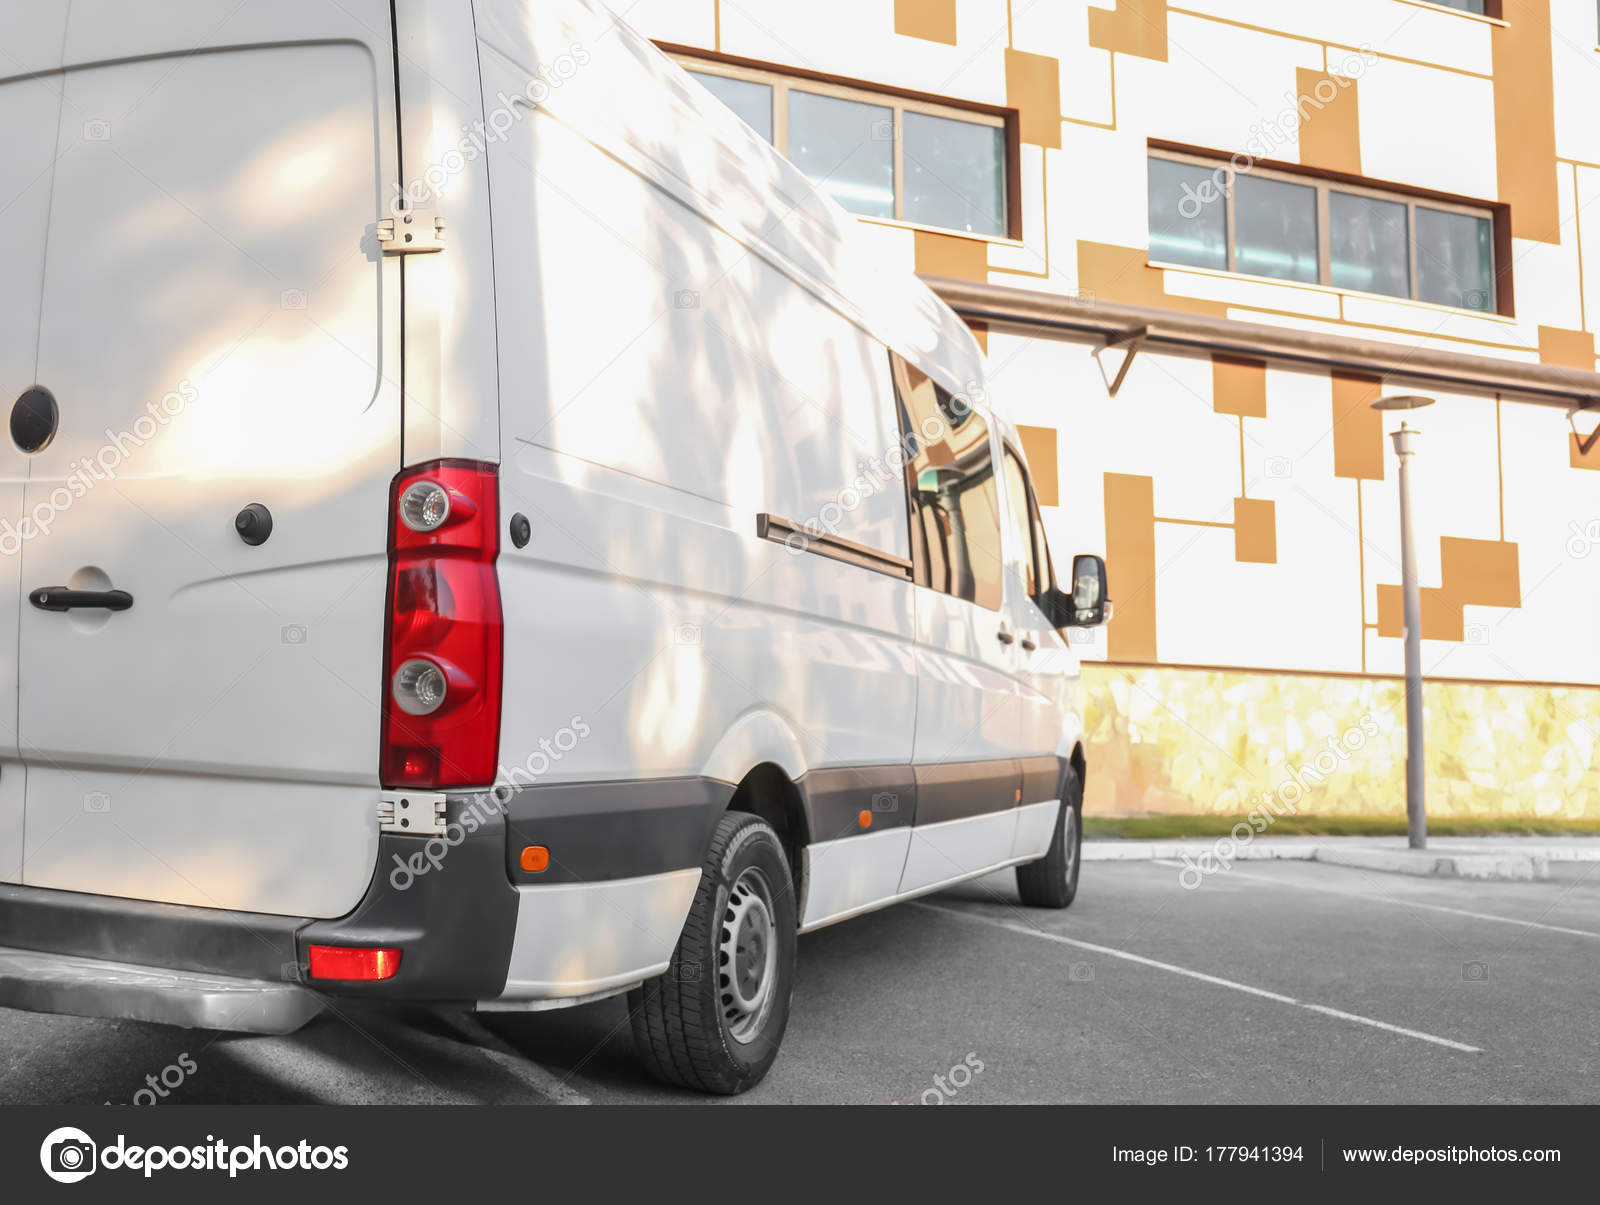 White van parked on street — Stock Photo © belchonock #177941394